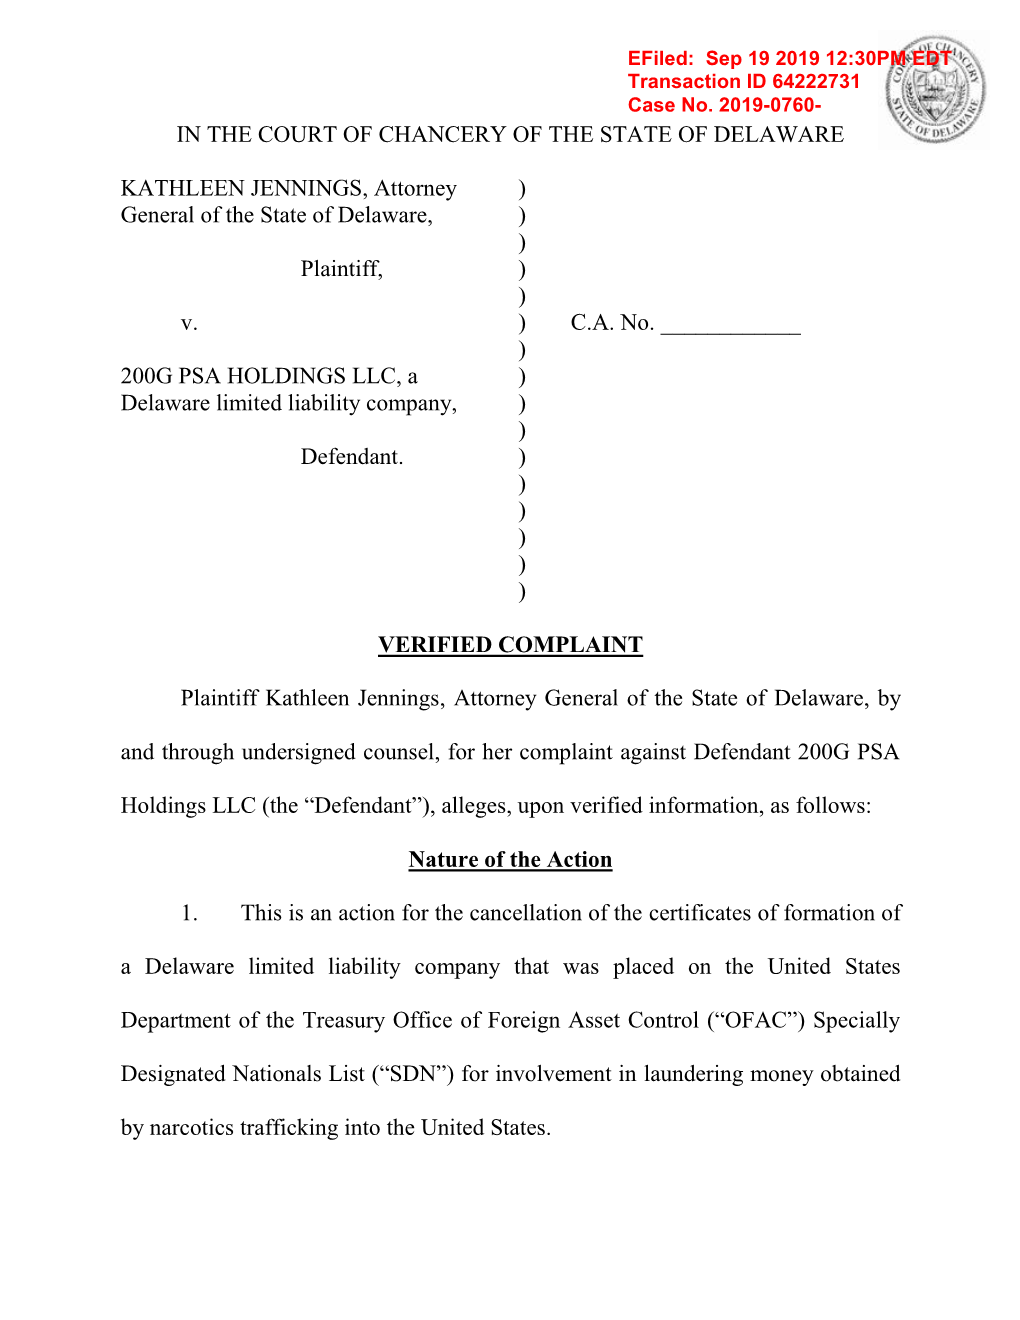 200G PSA HOLDINGS LLC, a ) Delaware Limited Liability Company, ) ) Defendant